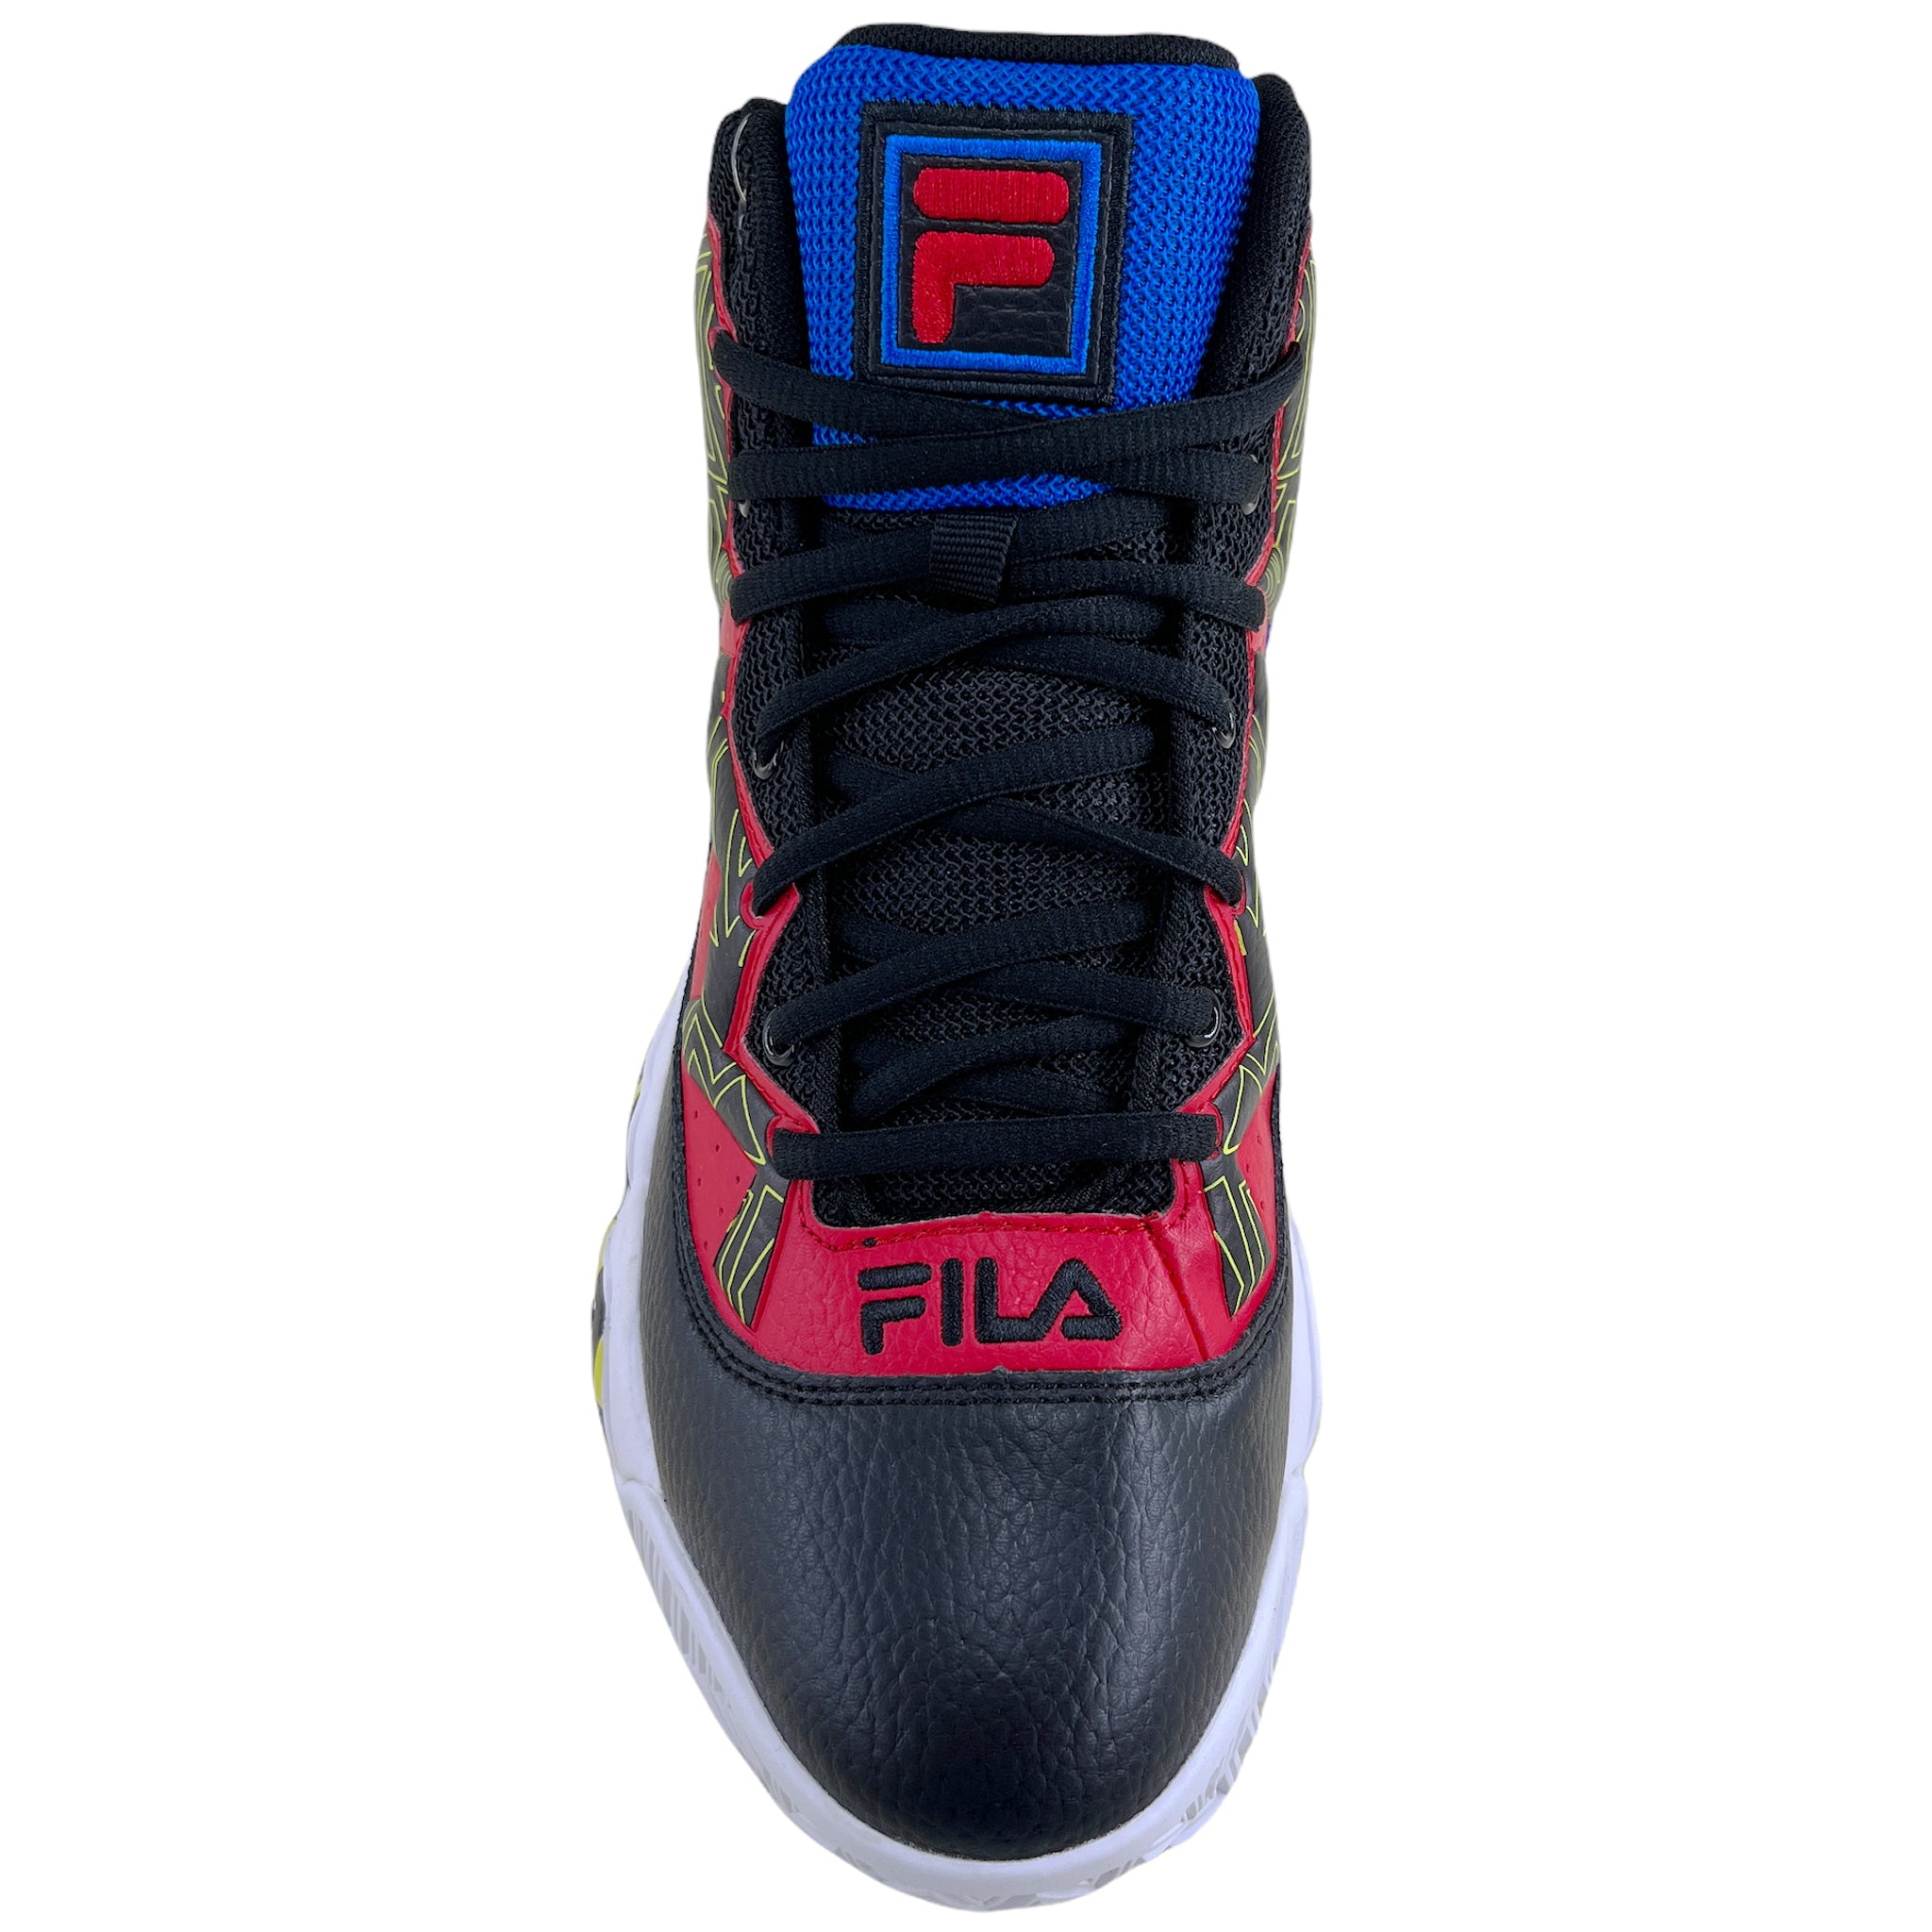 Fila's Retro Release of Jamal Mashburn's Shoe is Available 